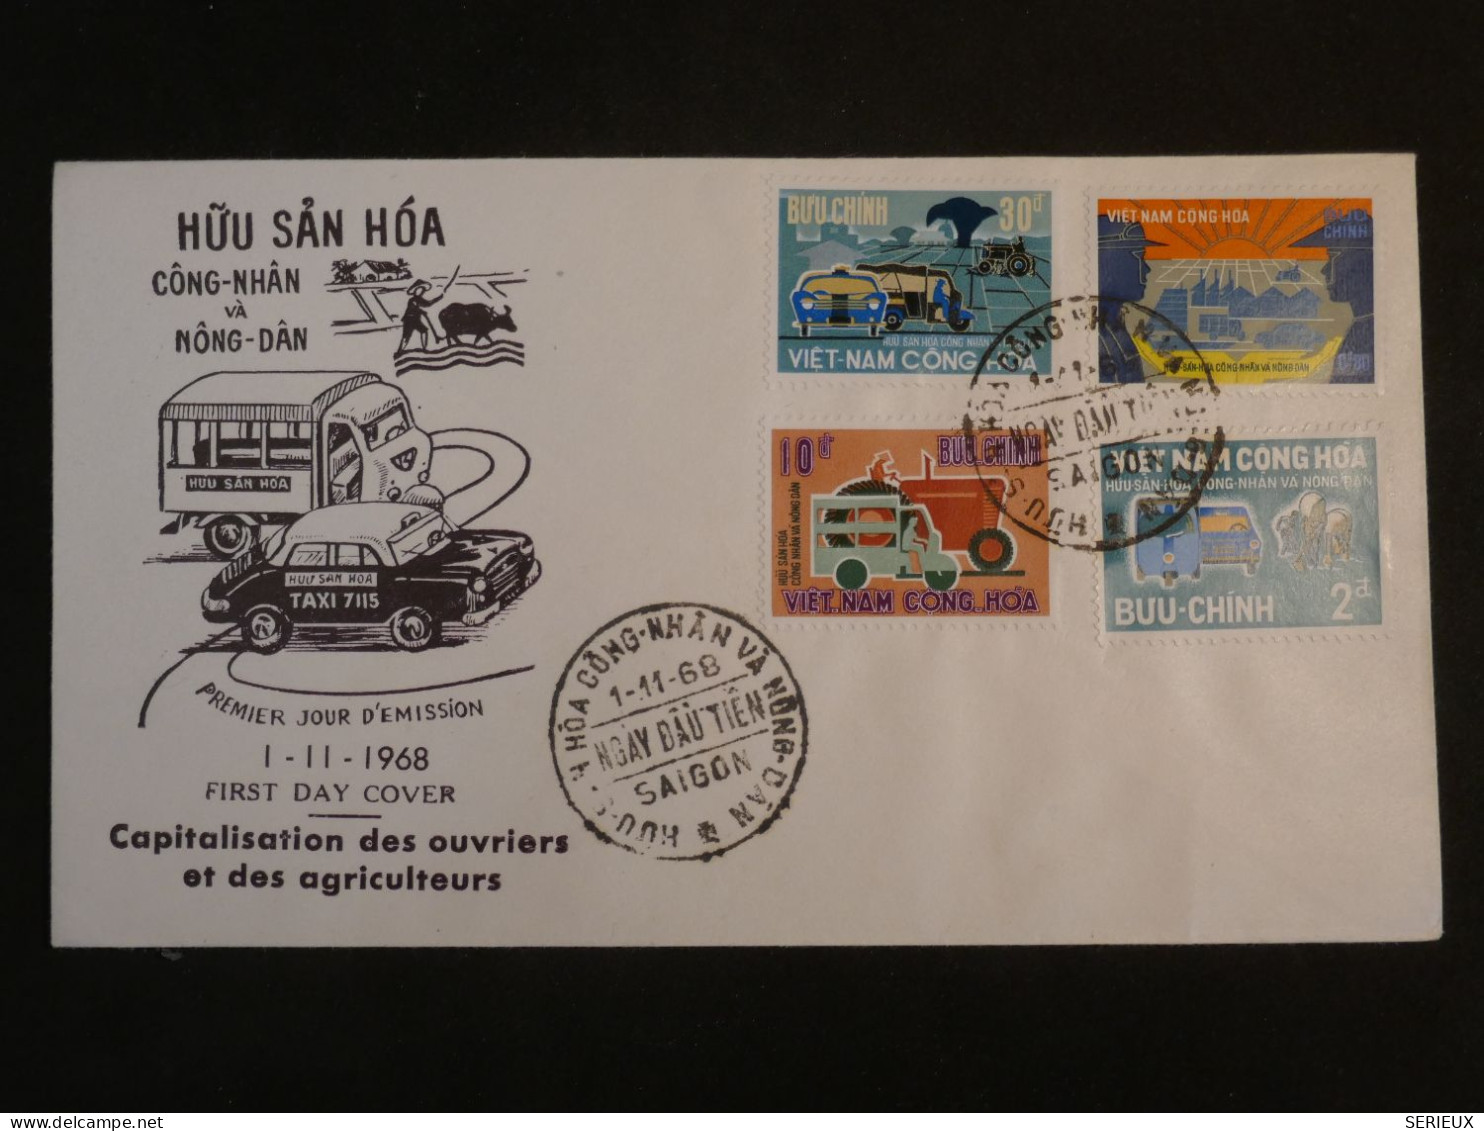 AJ0  VIETNAM  CONG HOA BELLE LETTRE FDC  1968 HUU SAN HOA  SAIGON . +30 D +AFF. PLAISANT+++ - Viêt-Nam